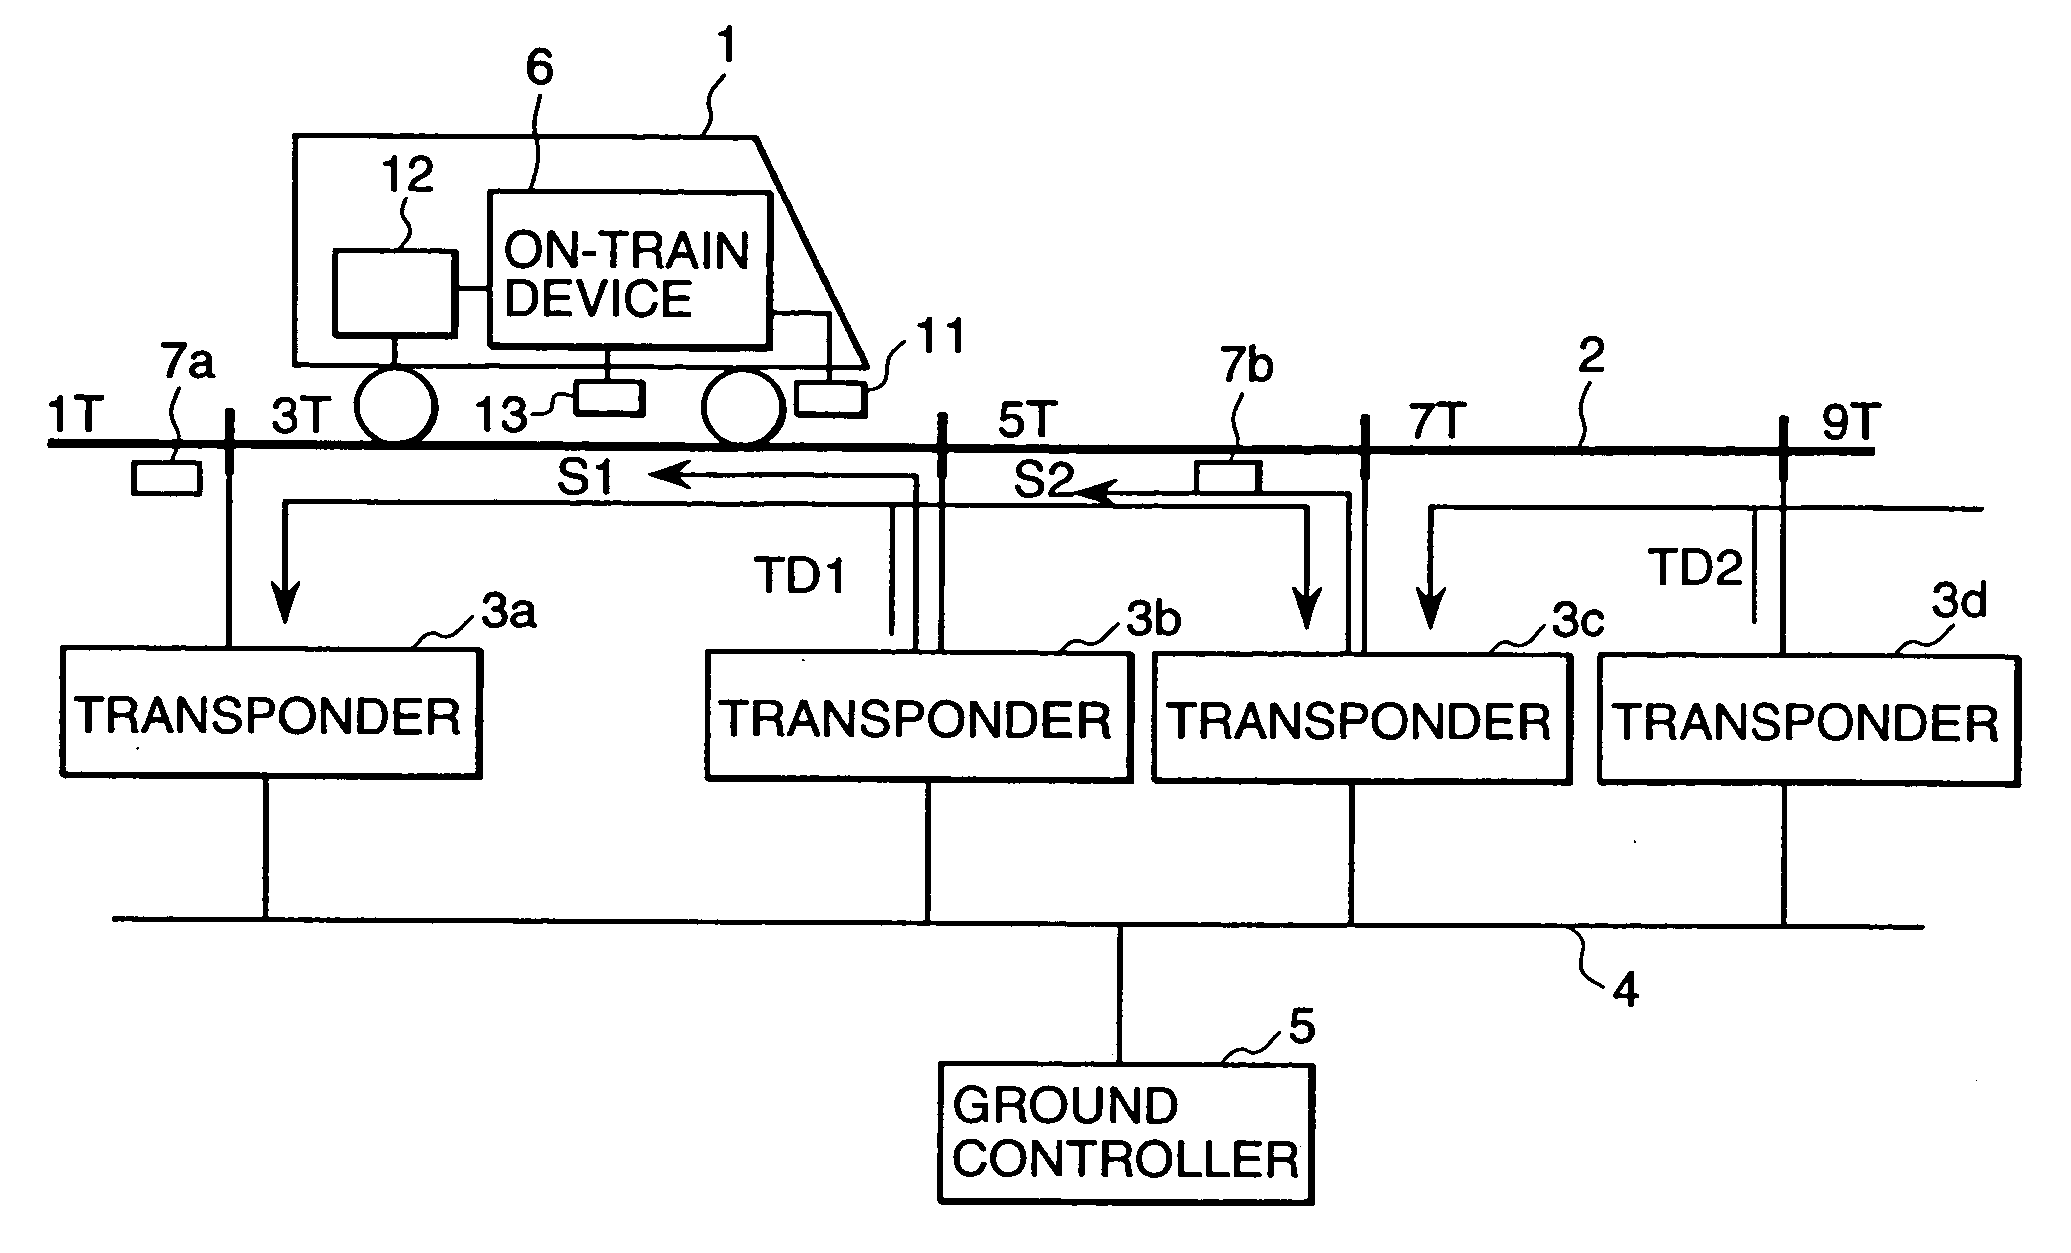 Method for train positioning